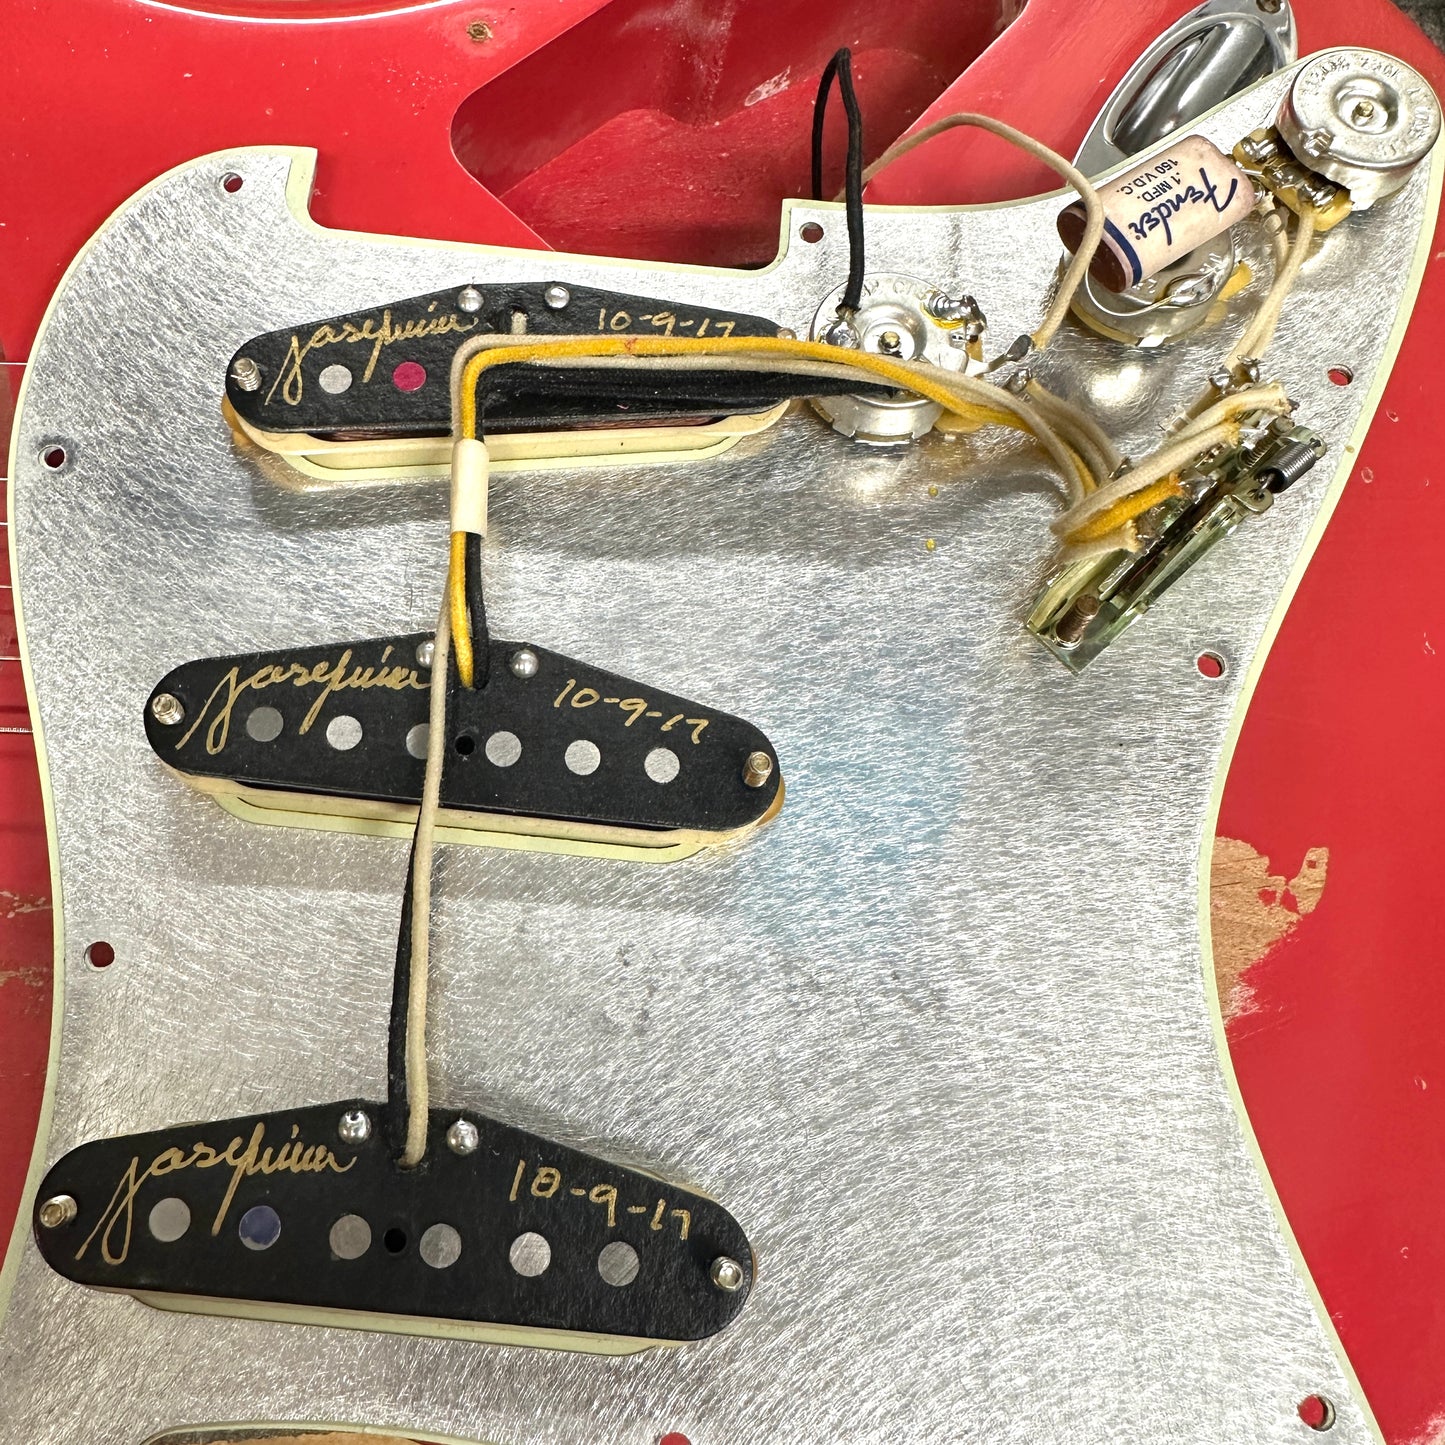 2017 Fender Custom Shop Dennis Galuszka Masterbuilt ’60s Stratocaster Relic - Fiesta Red